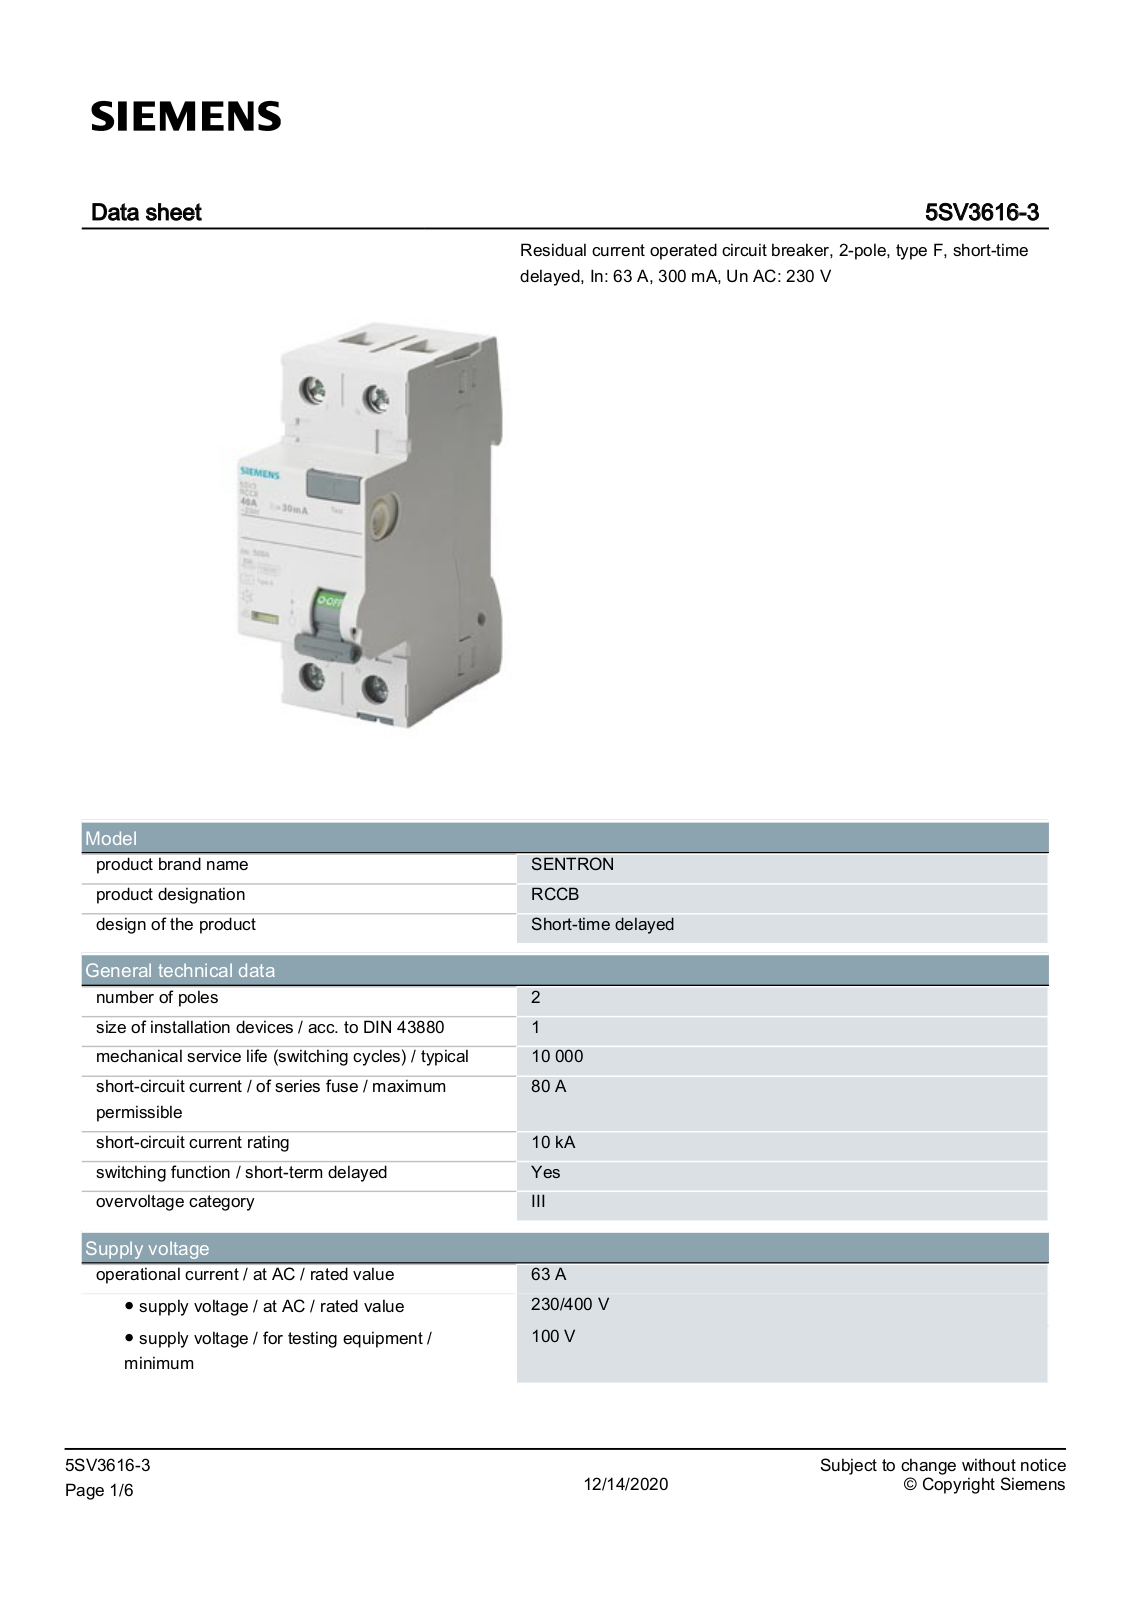 Siemens 5SV3616-3 data sheet